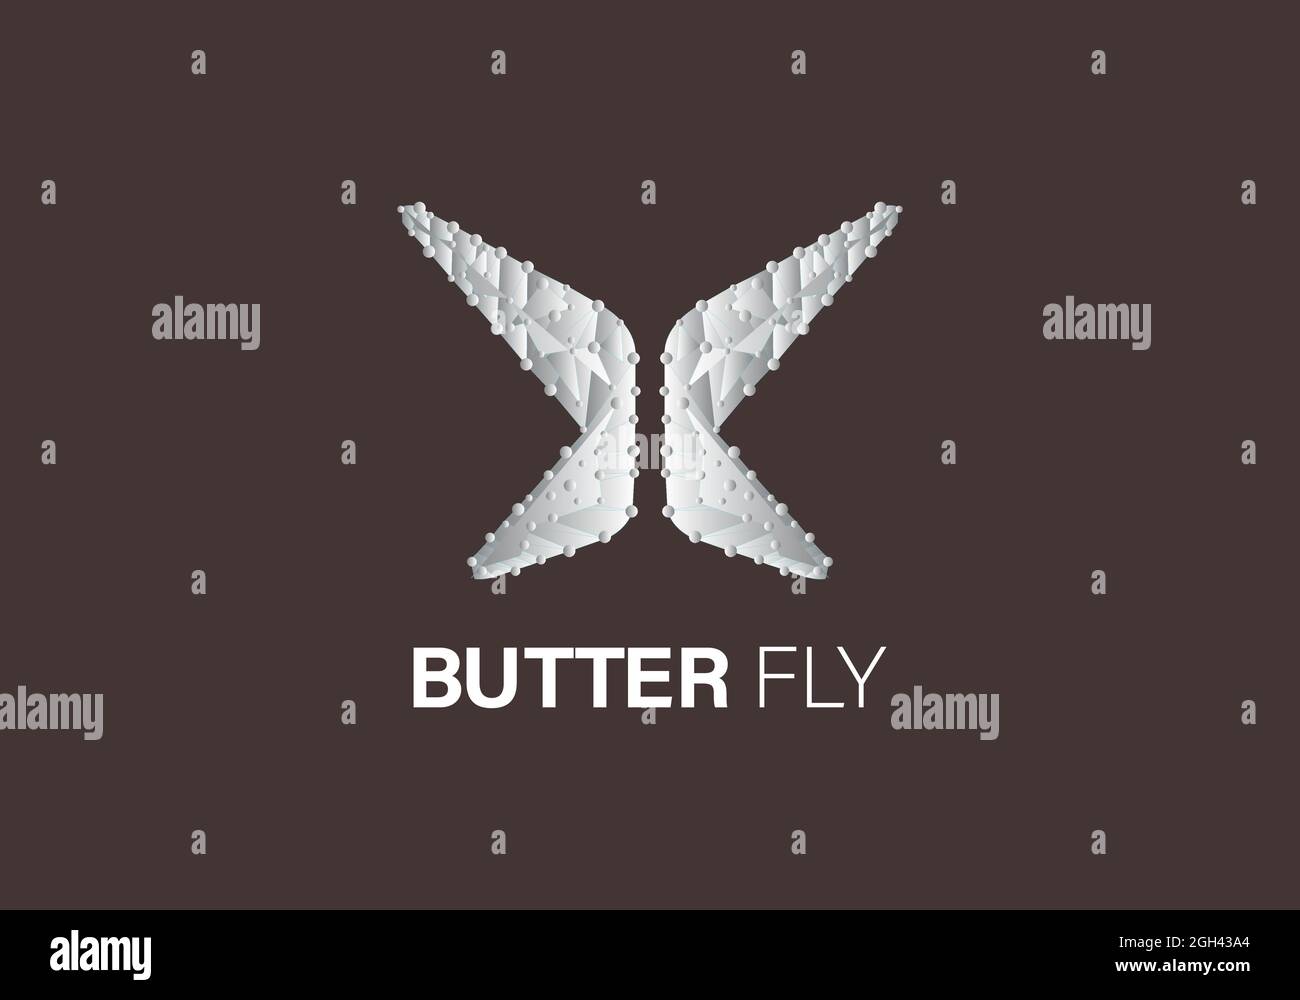 butter fly logo design template. Stock Vector